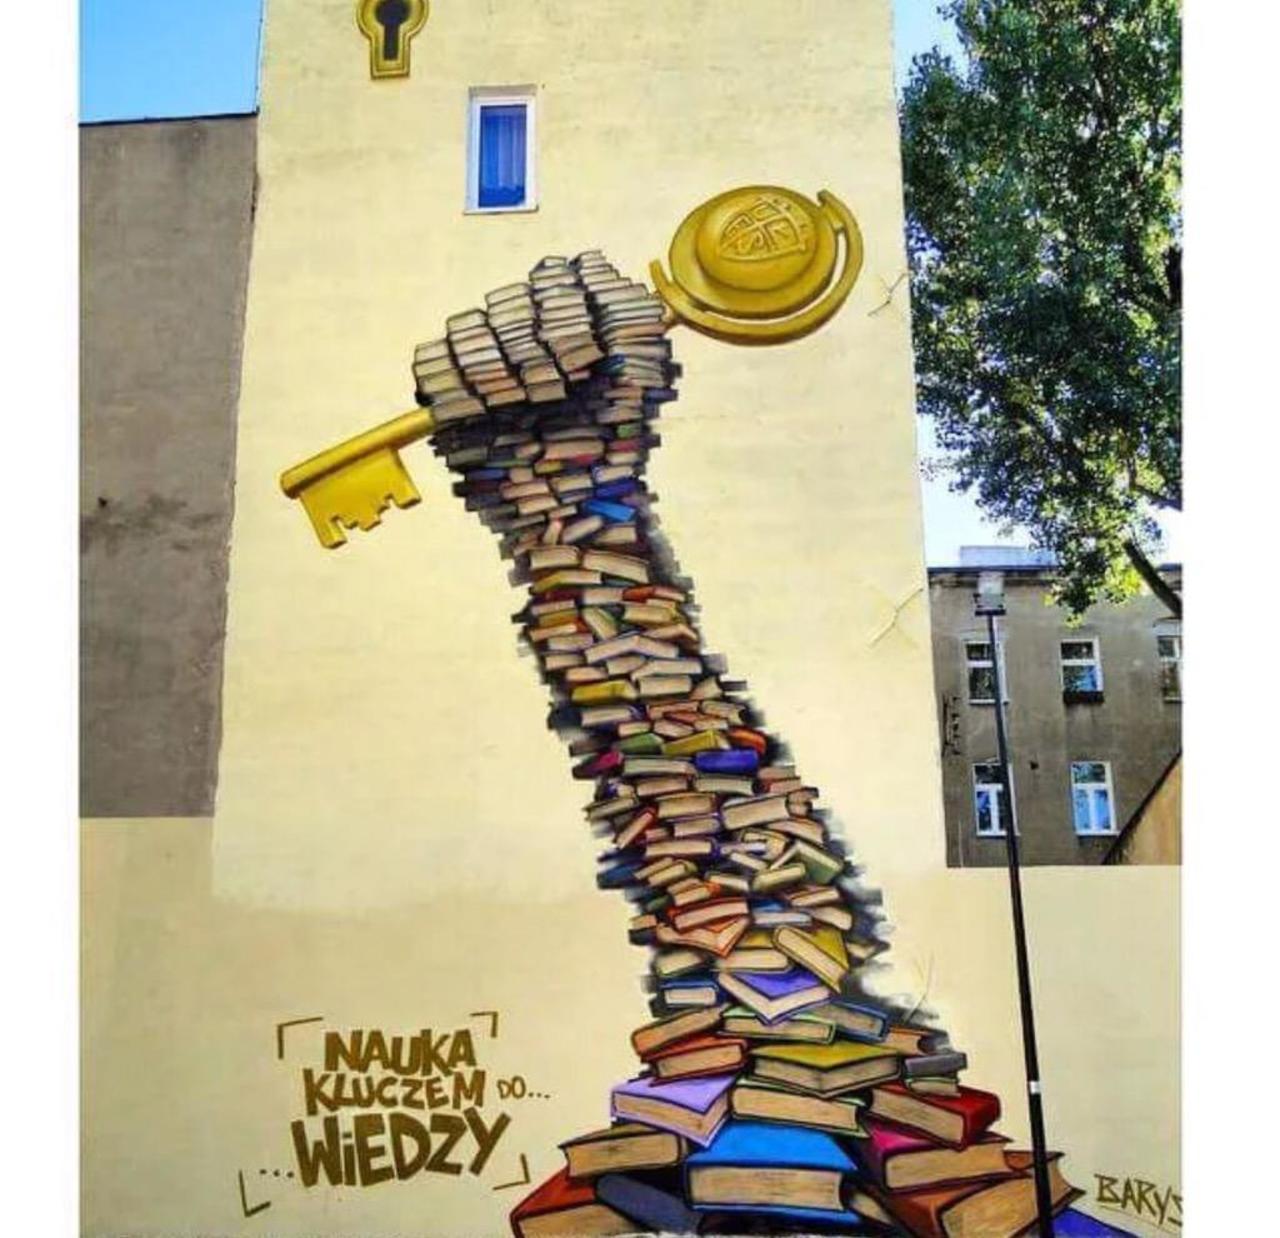 RT @AuKeats: #education is the key #streetart by #brays #switch #graffiti #bedifferent #arte #art http://t.co/TsFrja6Dd1